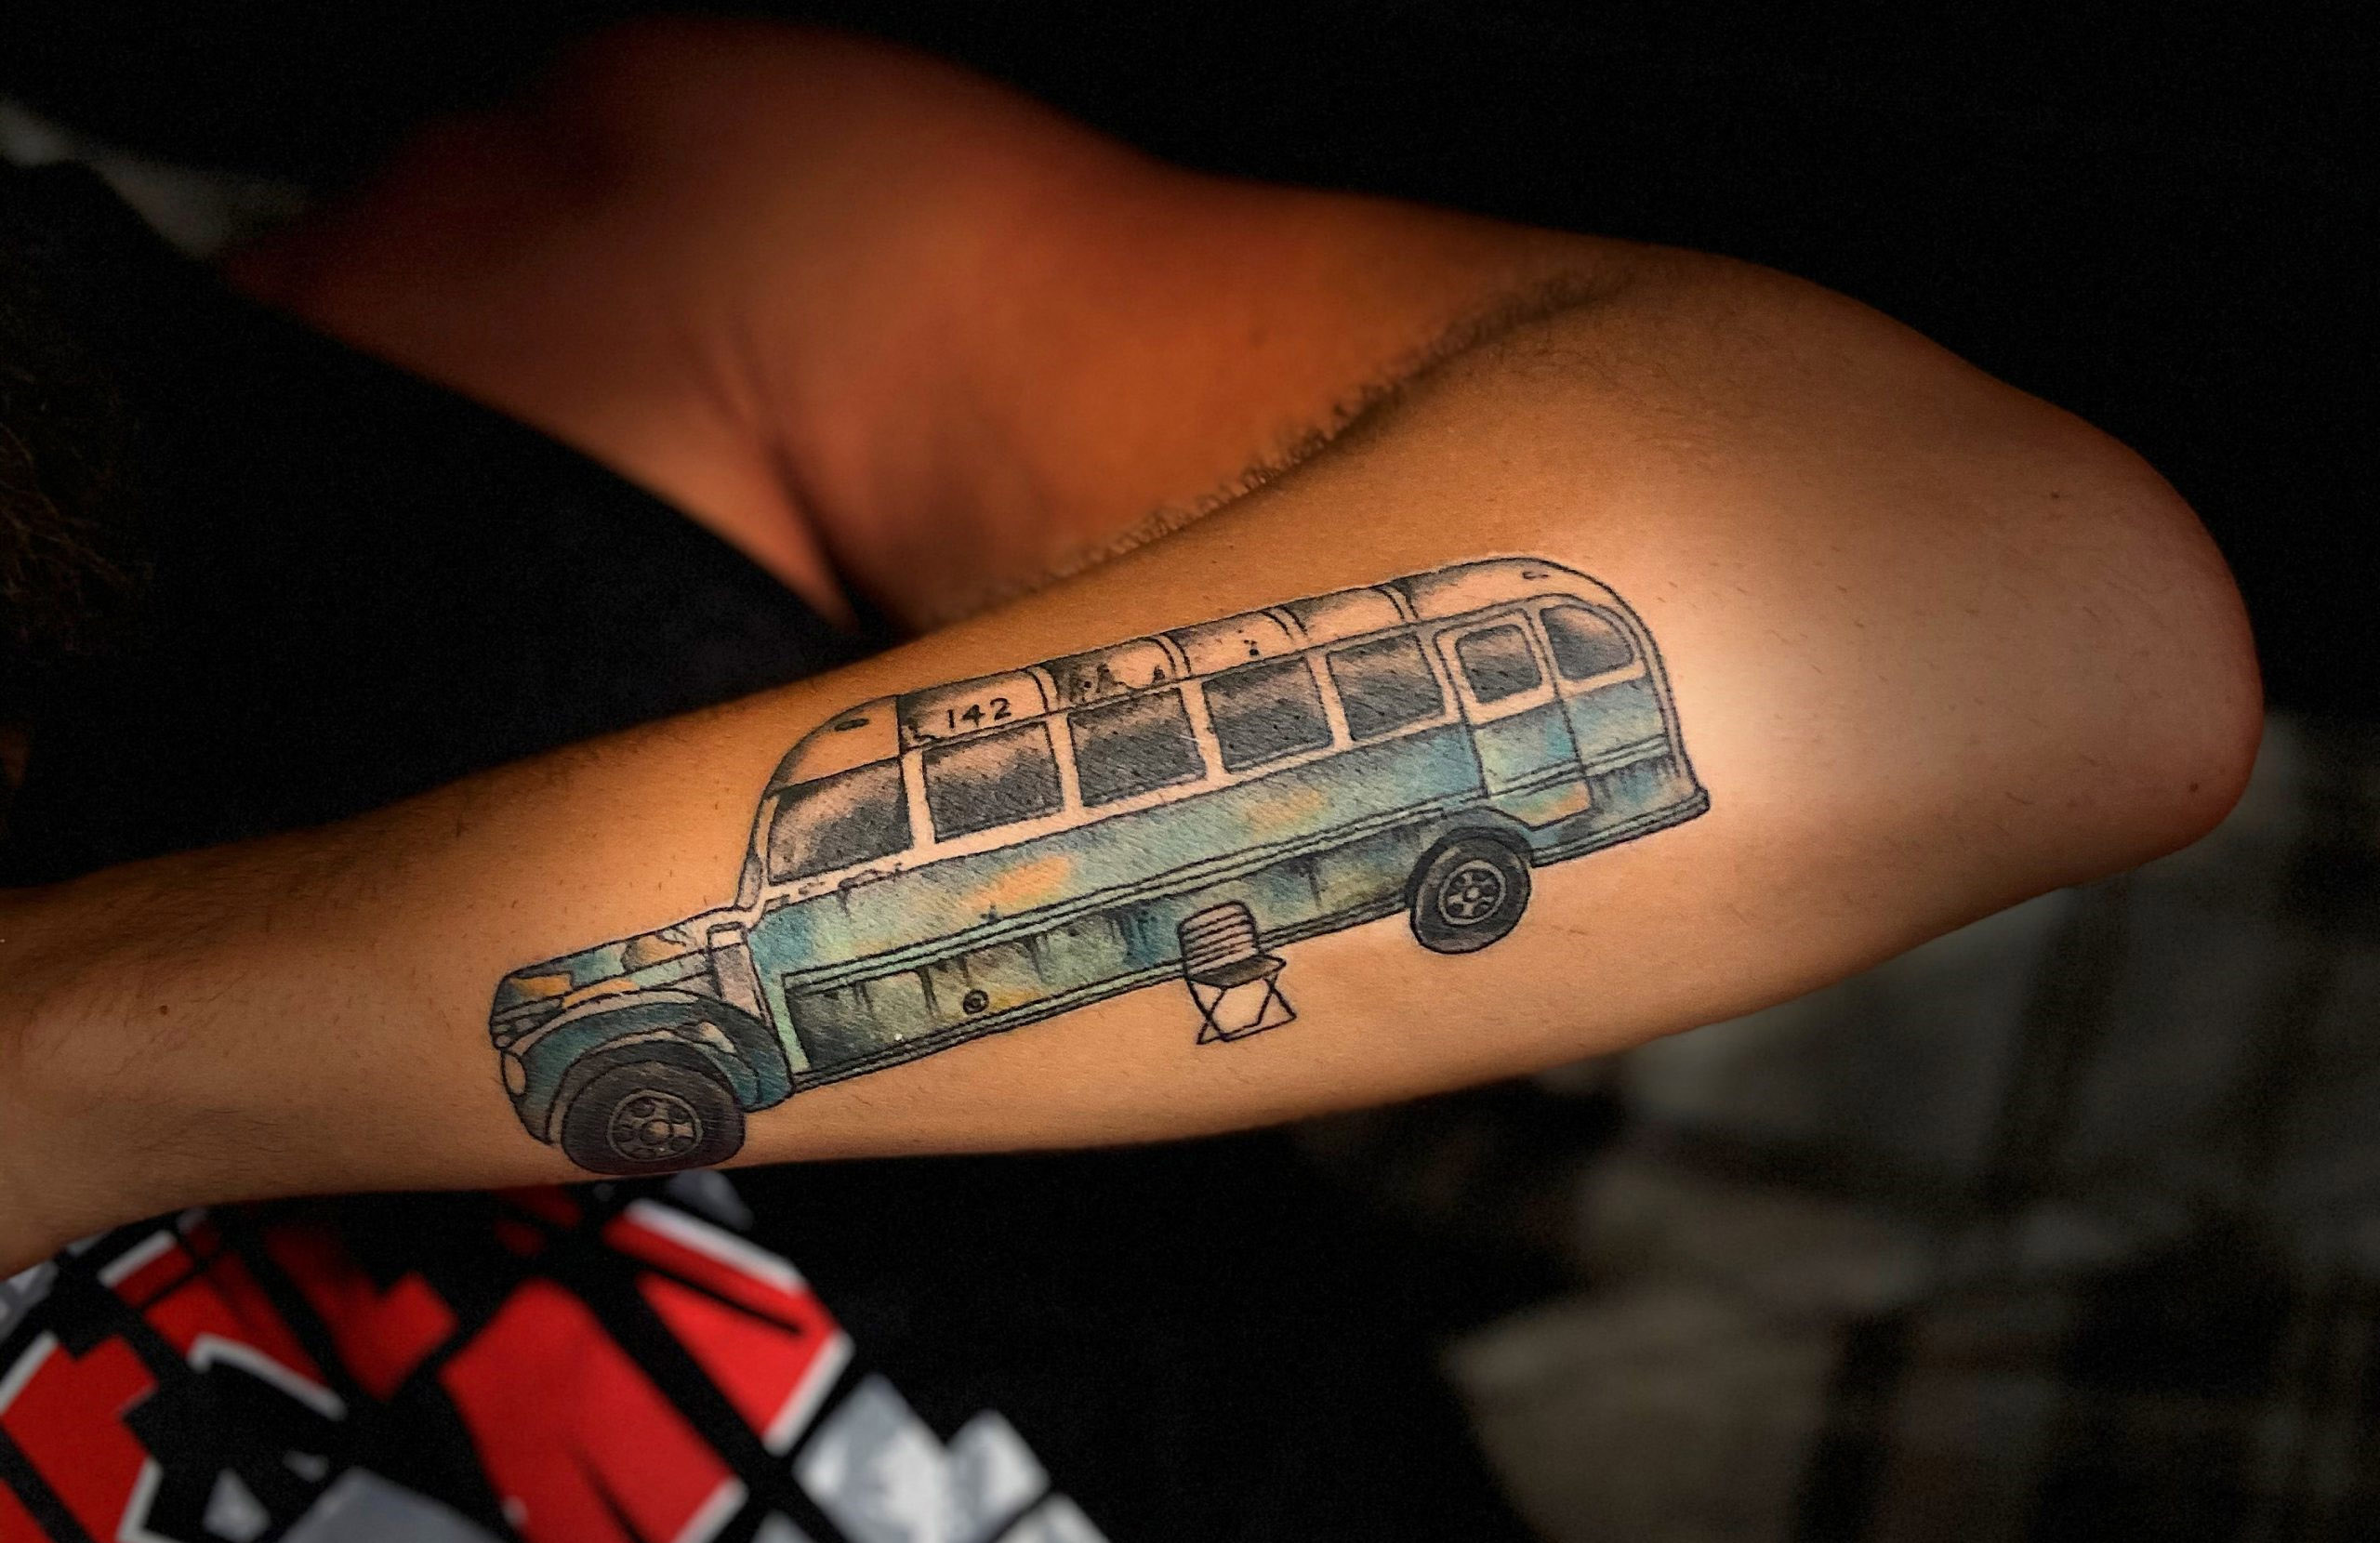 Jesse Salvacion's Bus 142 Tattoo by Russell Kelley